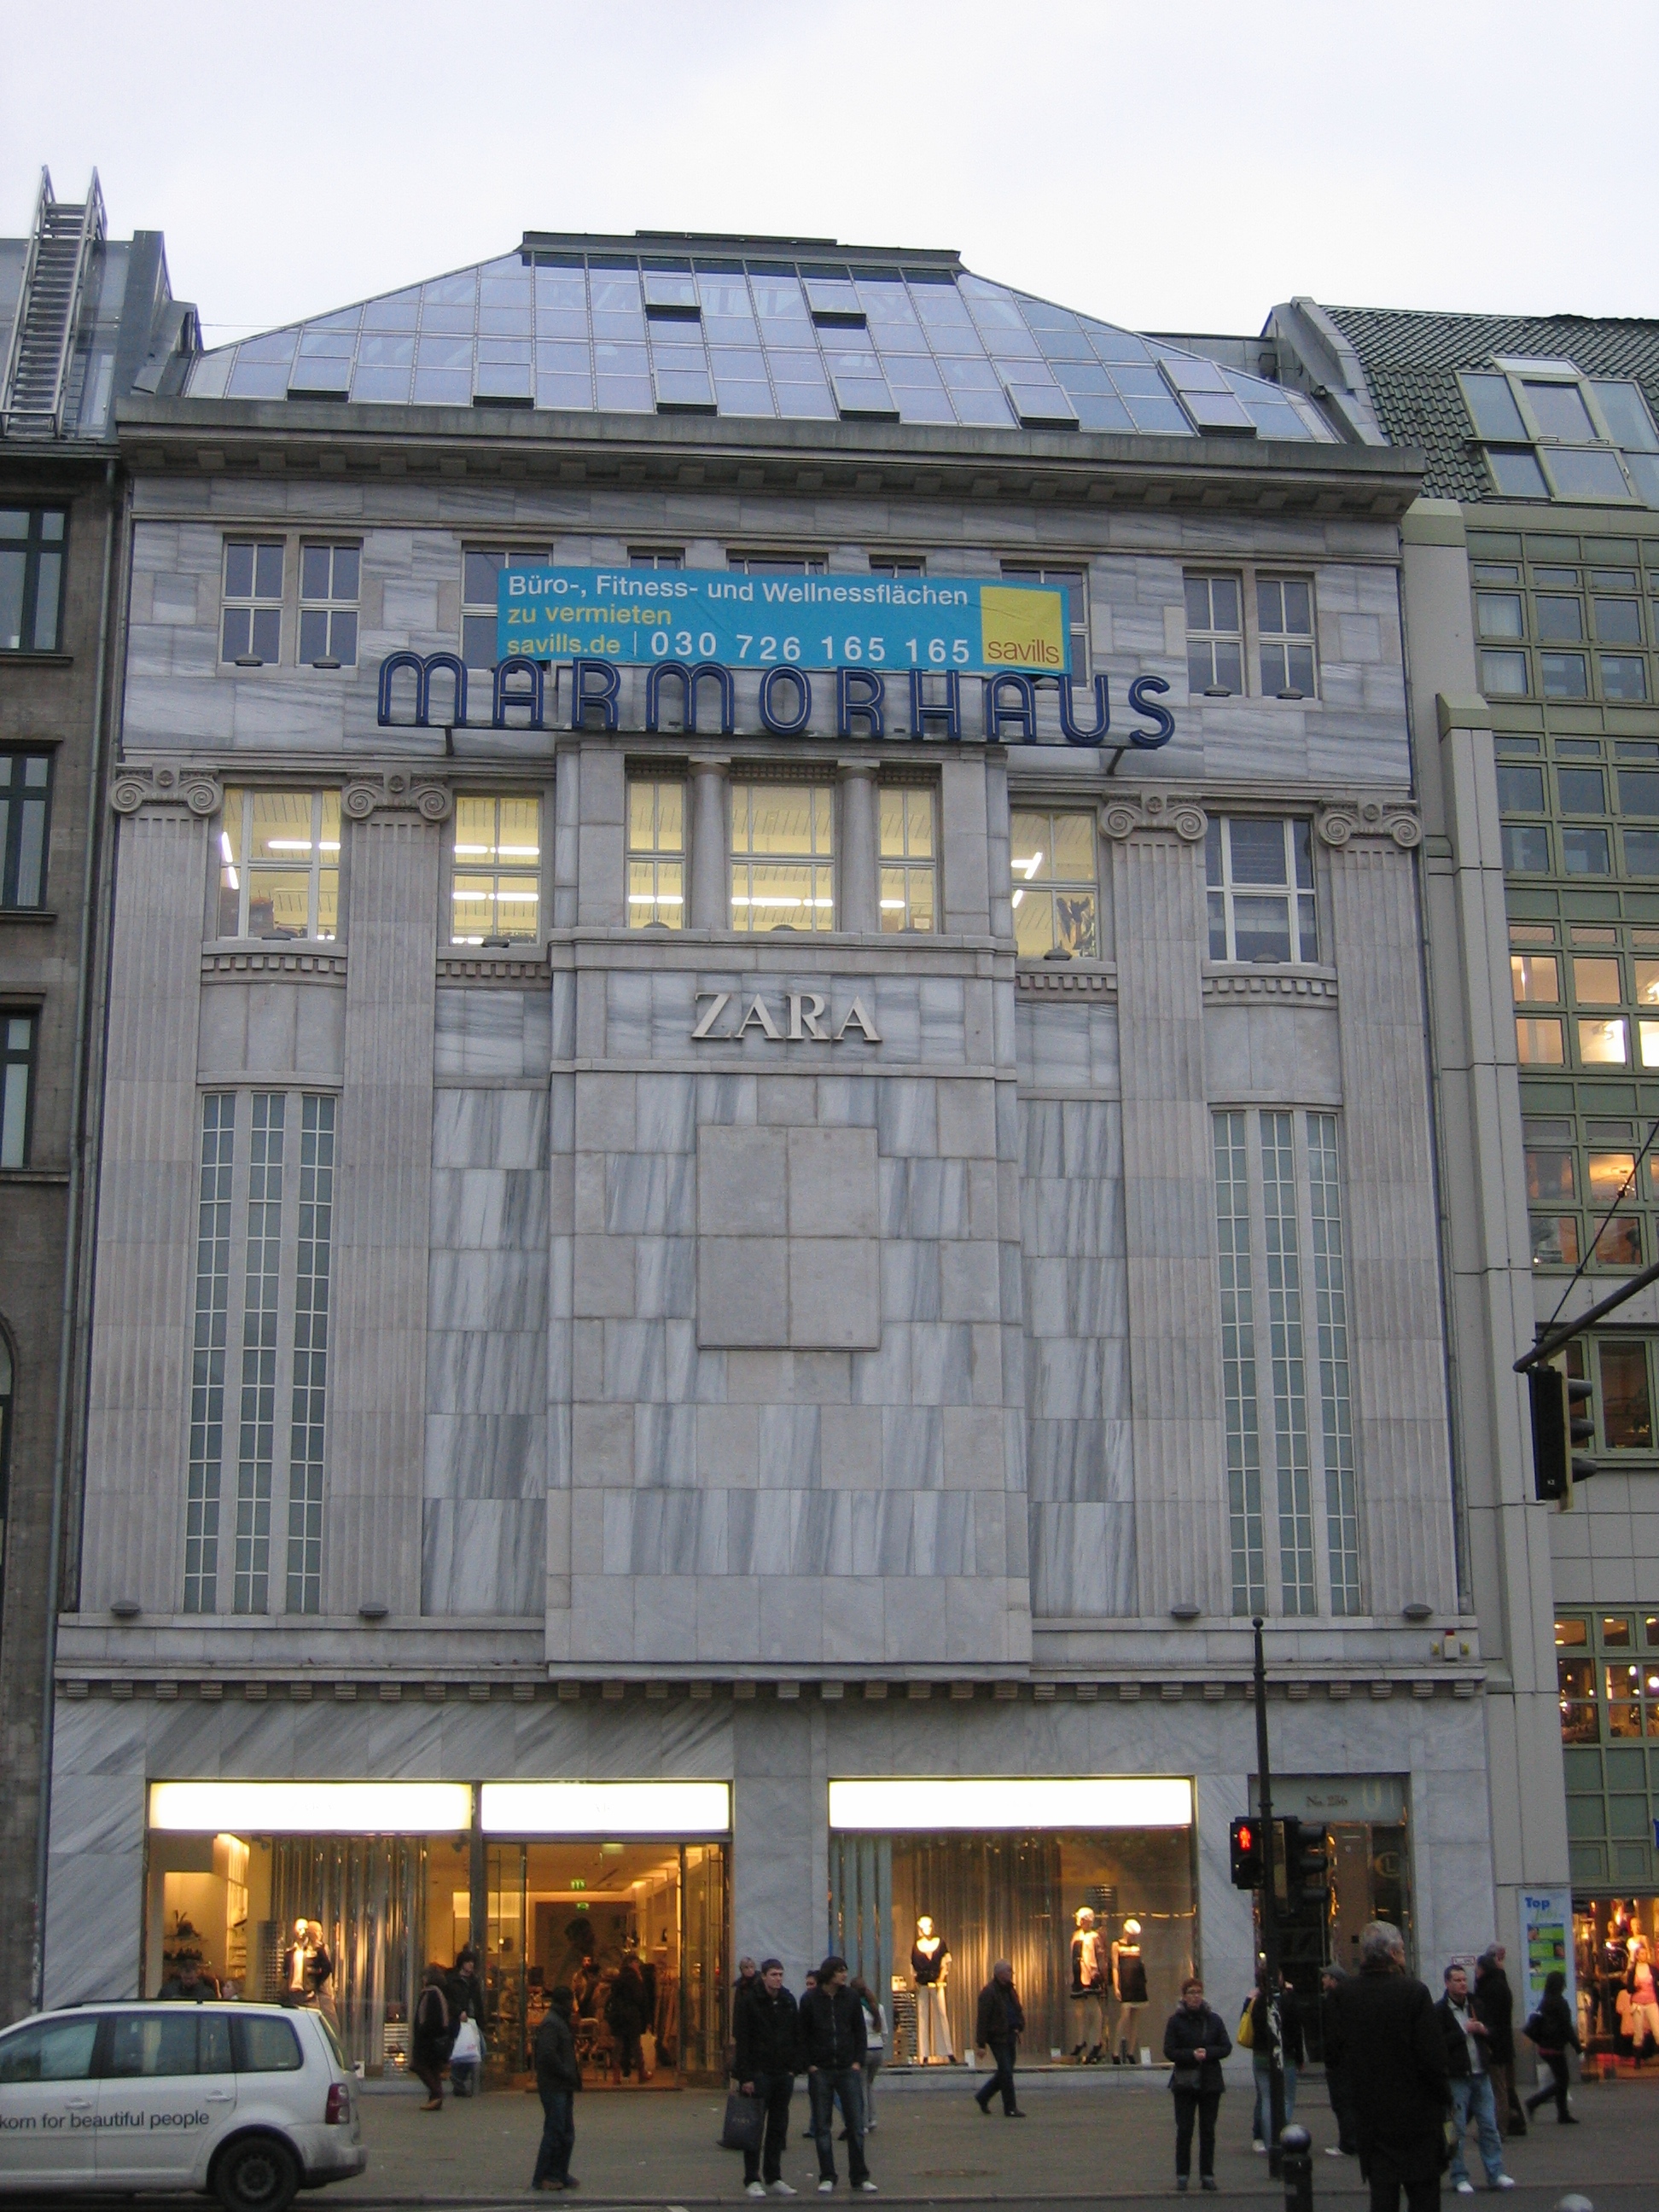 ehemaliges Filmtheater Marmorhaus Berlin, Quelle: Wikimedia Commons/A.Savin, Lizenz: CC-BY-SA 3.0